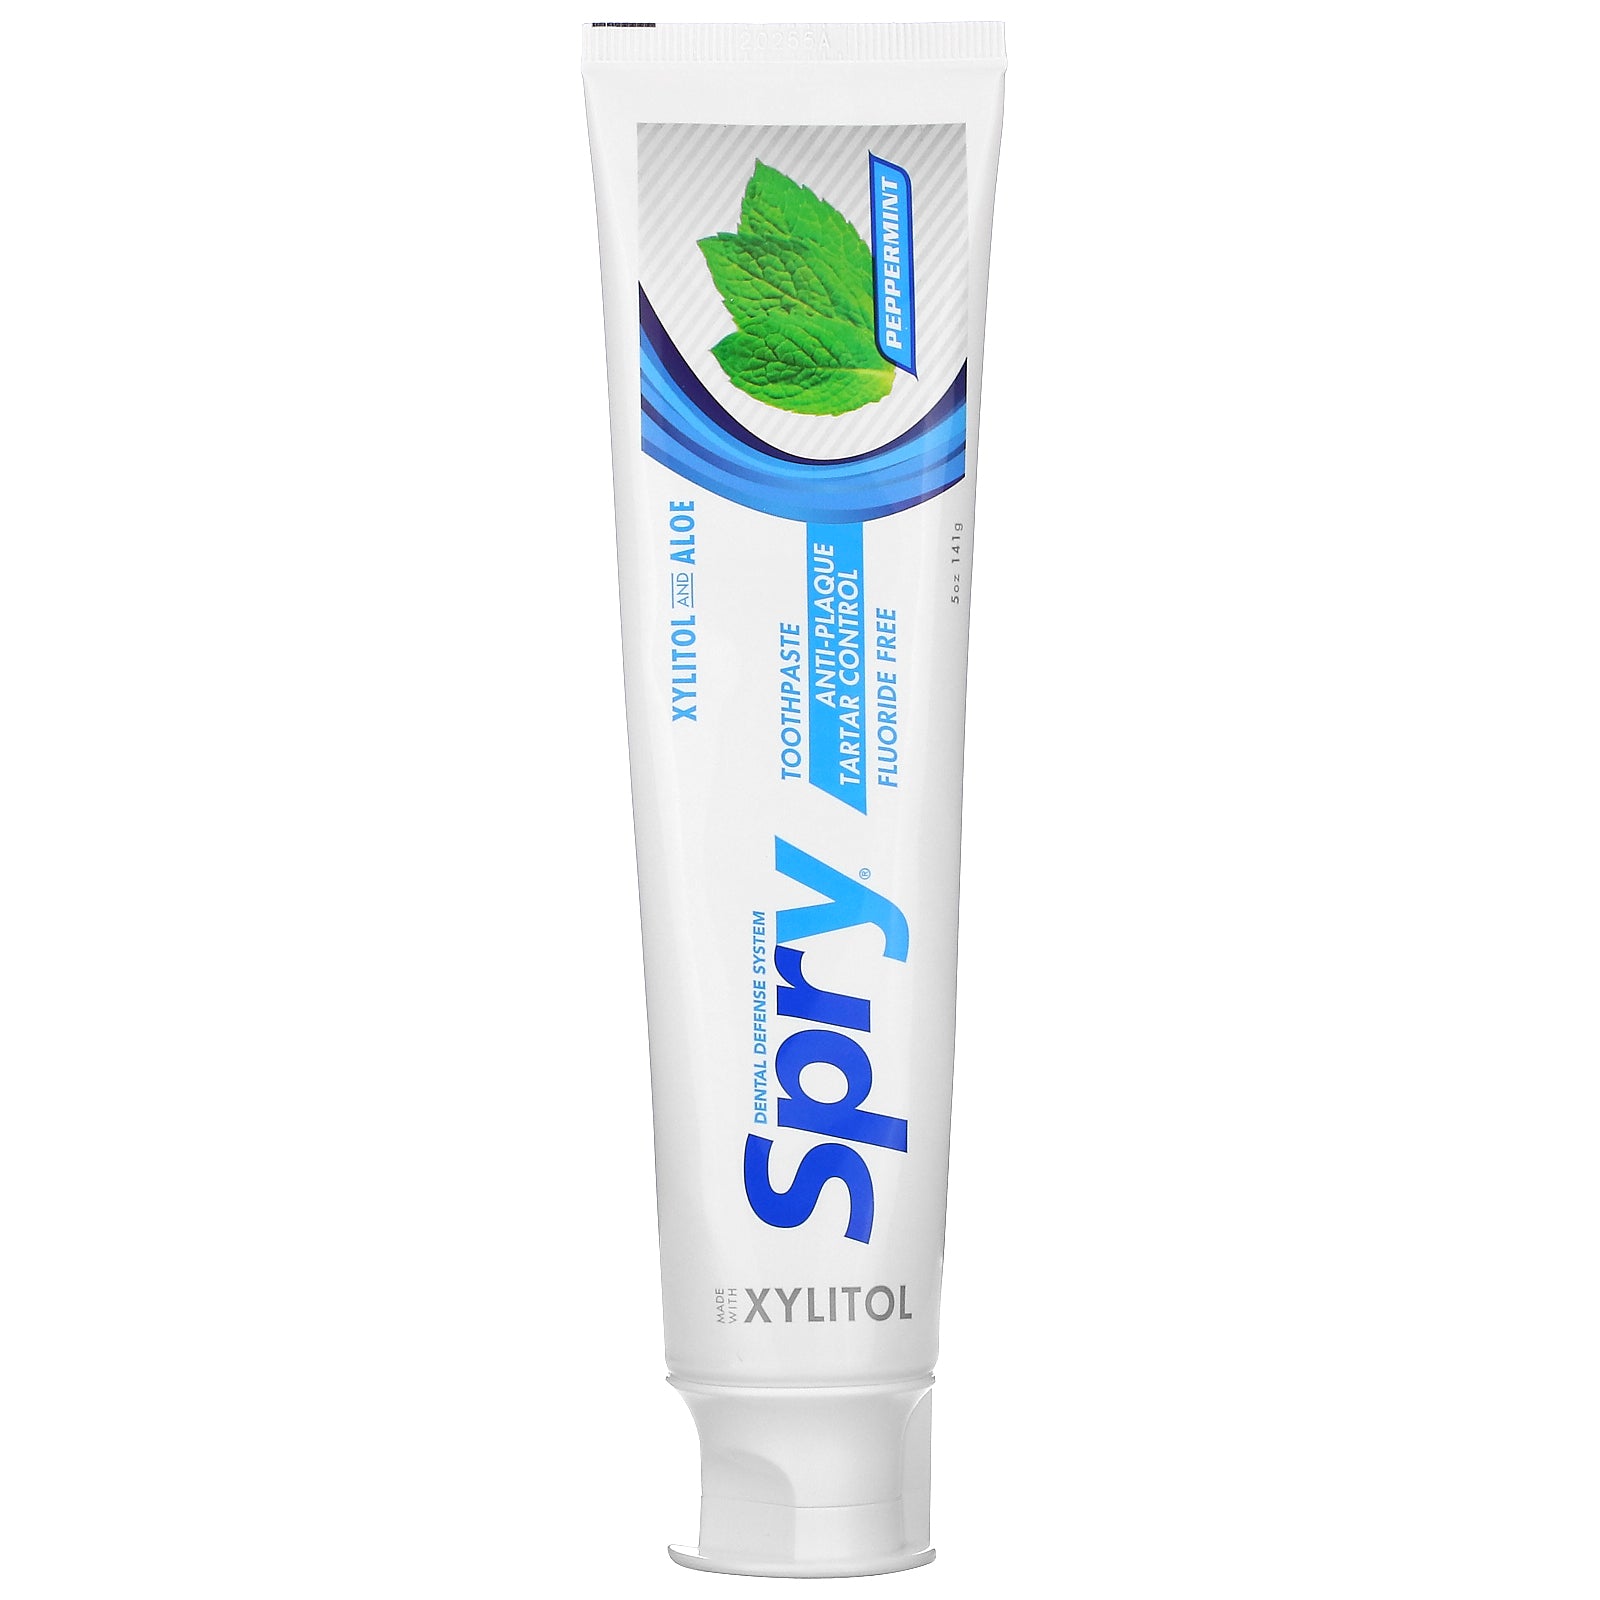 Xlear, Spry Toothpaste, Anti-Plaque Tartar Control, Fluoride Free, Peppermint, 5 oz (141 g)